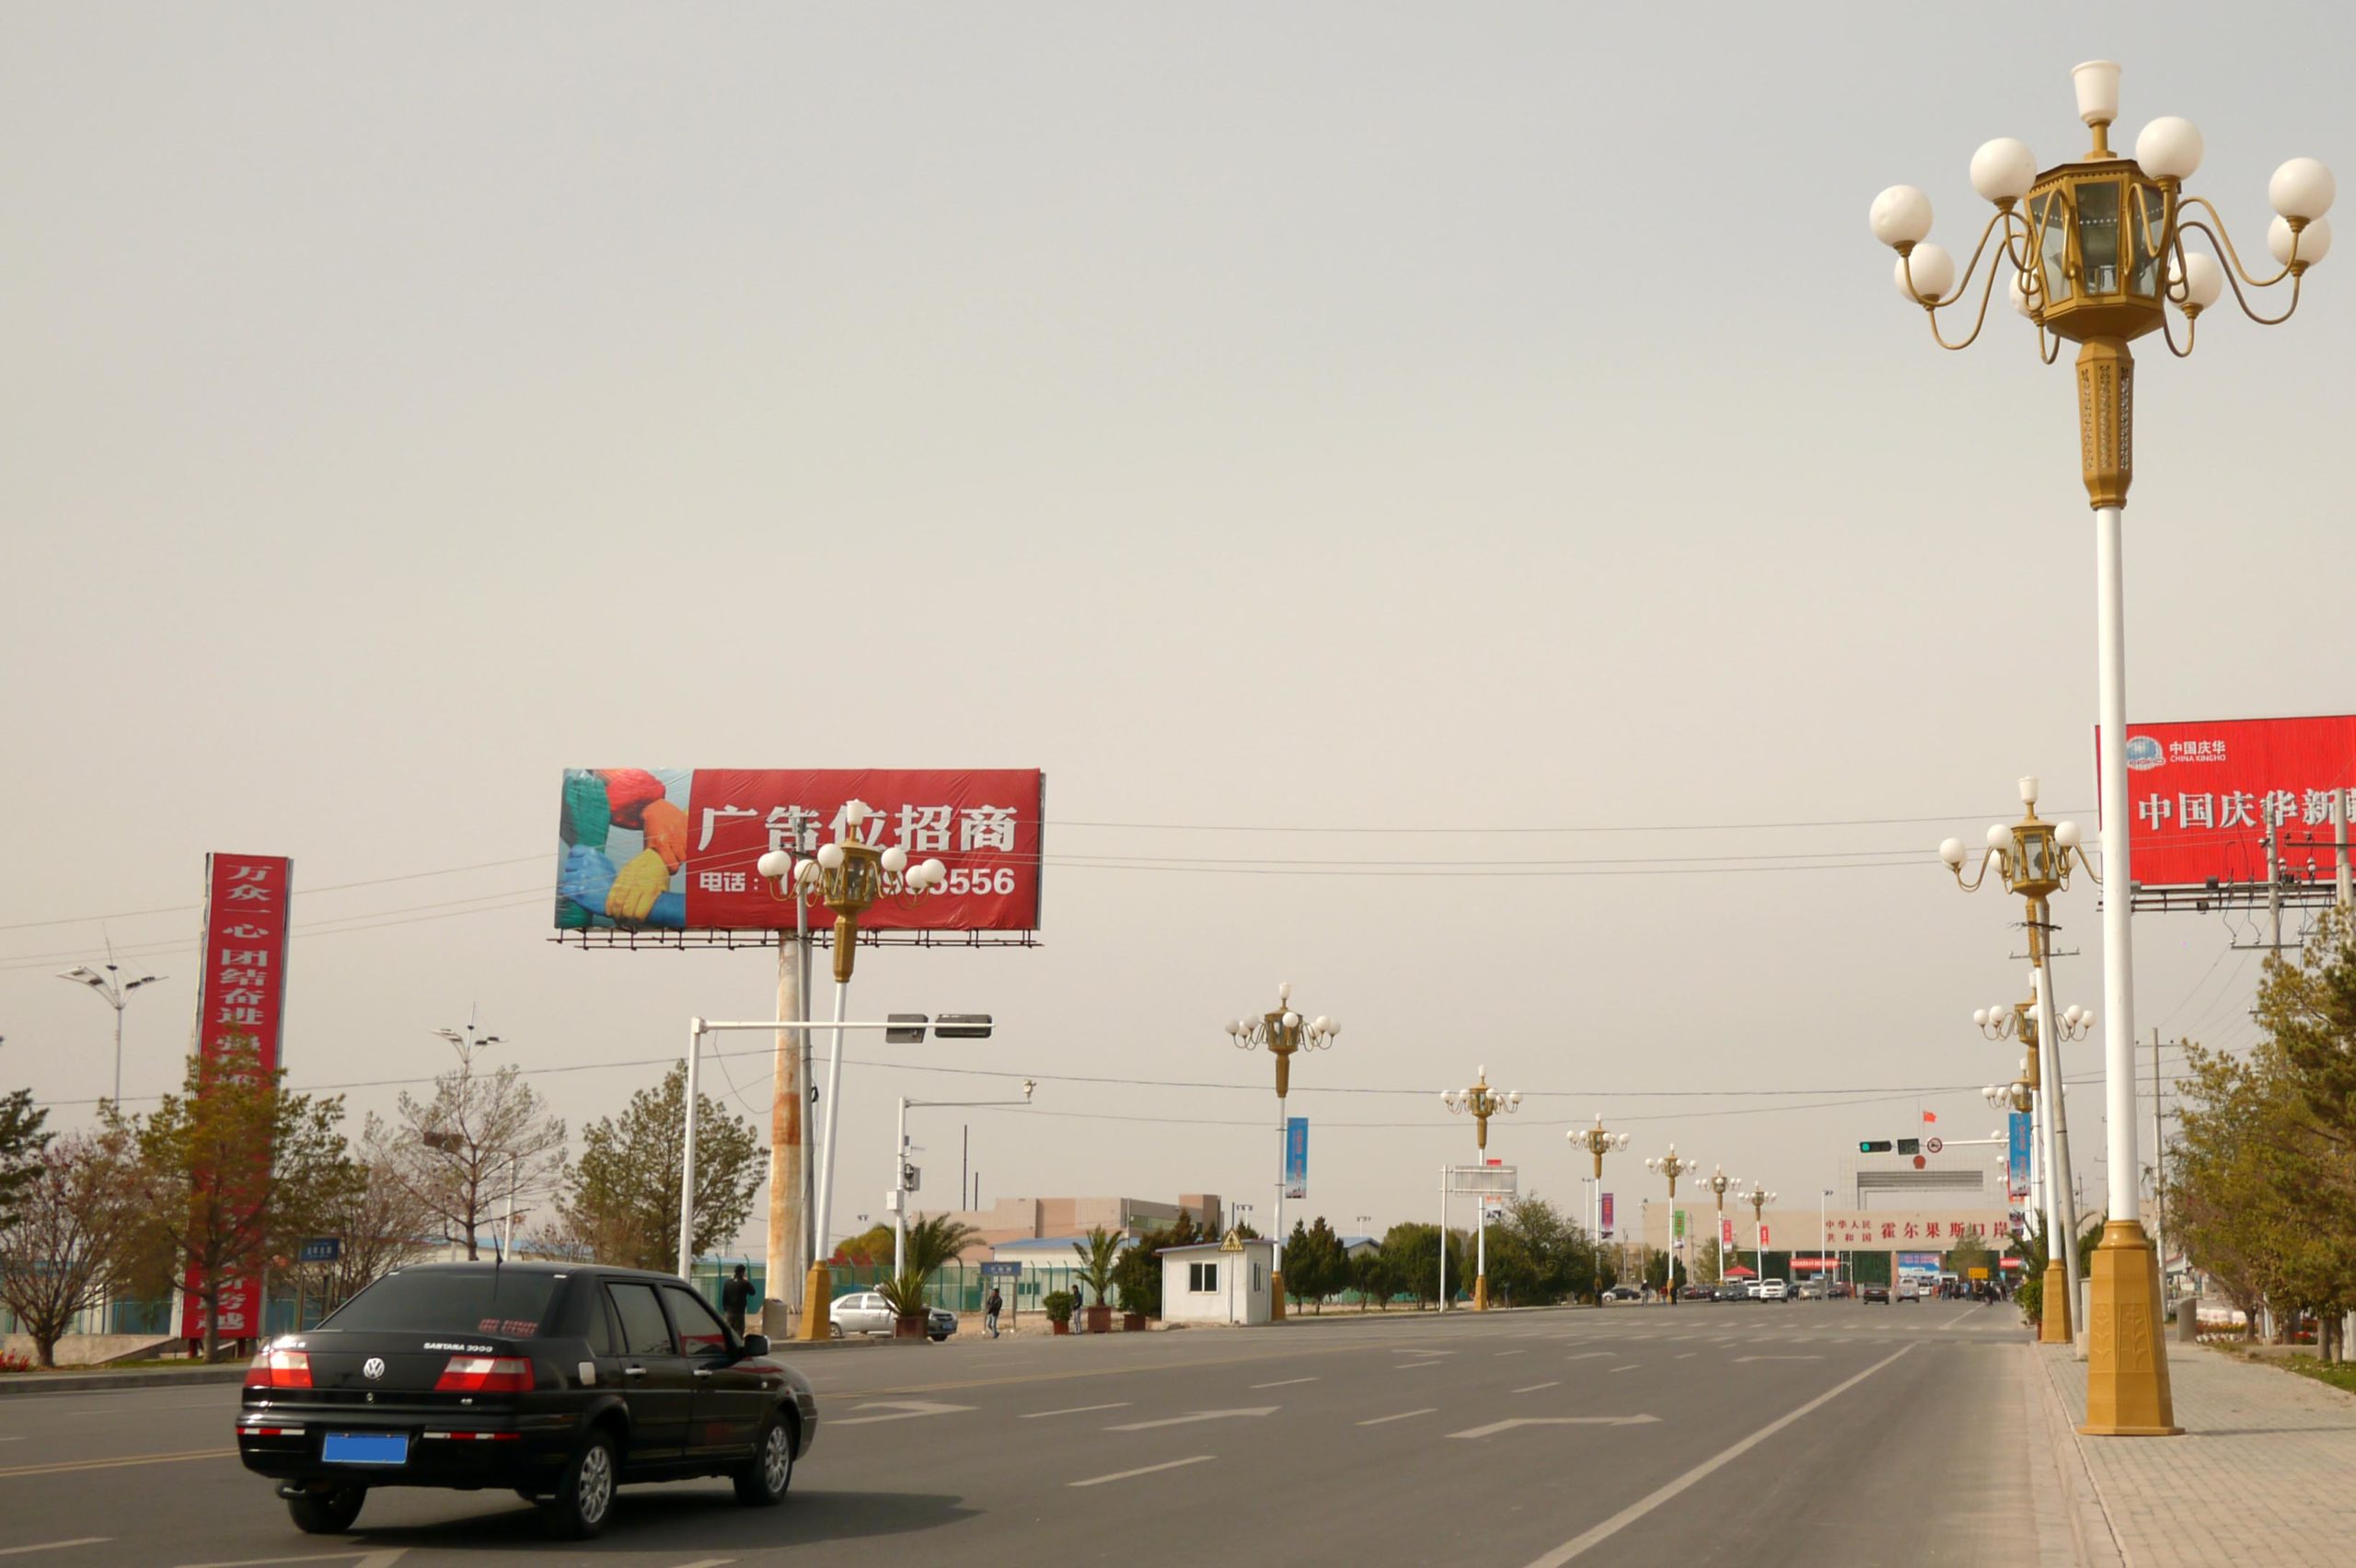 Ben Mauk on Xinjiang, Kazakhstan, China & Violence